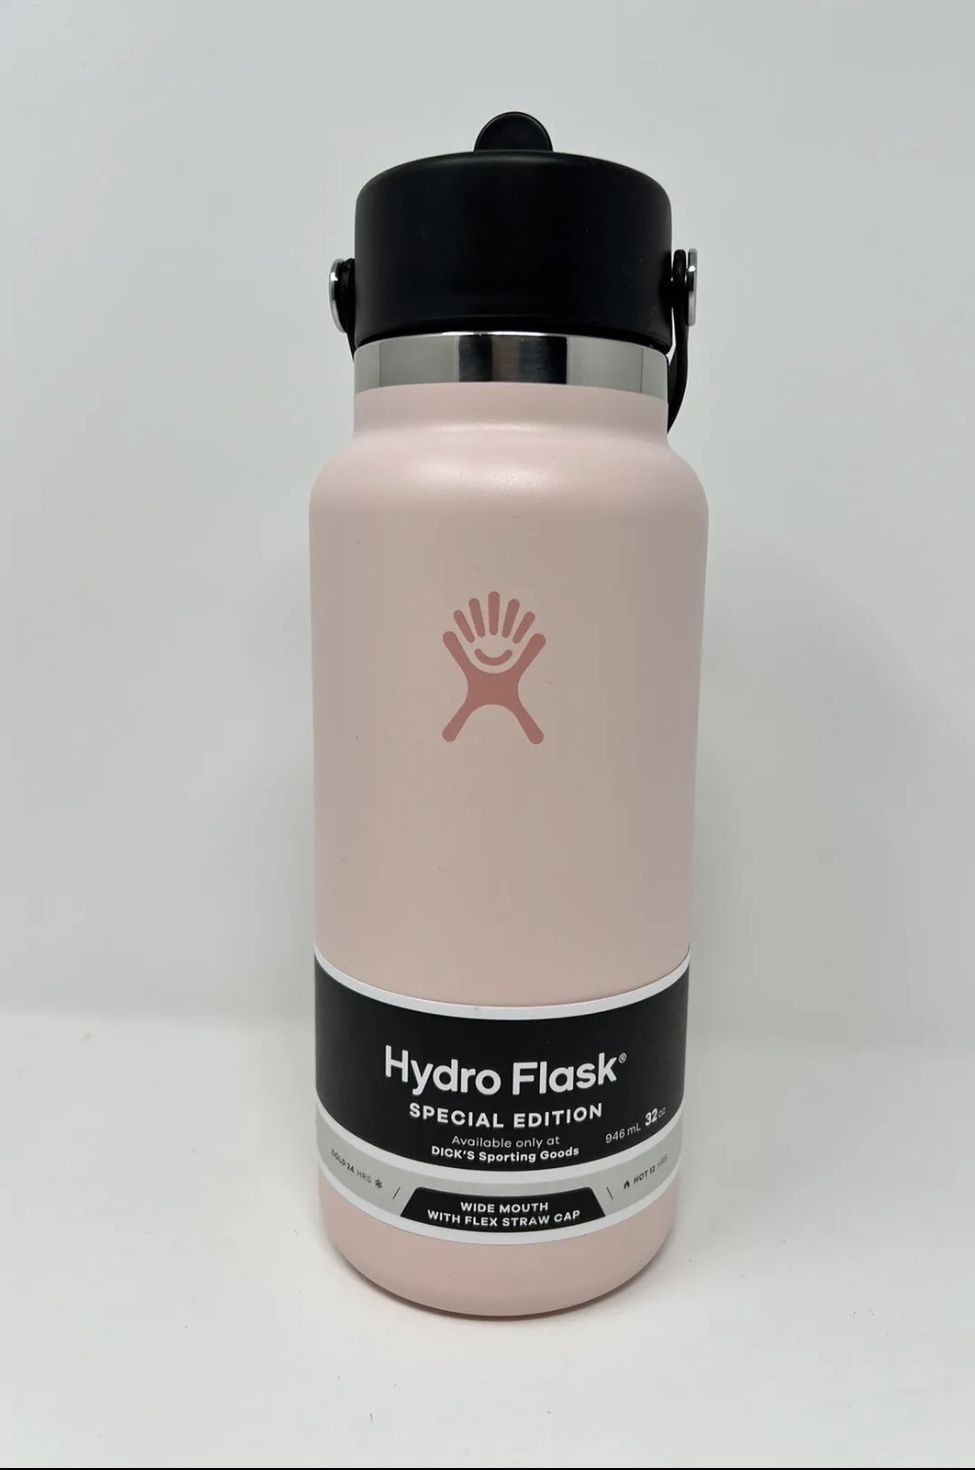 Powder Coated Hydro Flask(32oz/960ml,Common Blank,Red+Orange+Blue)